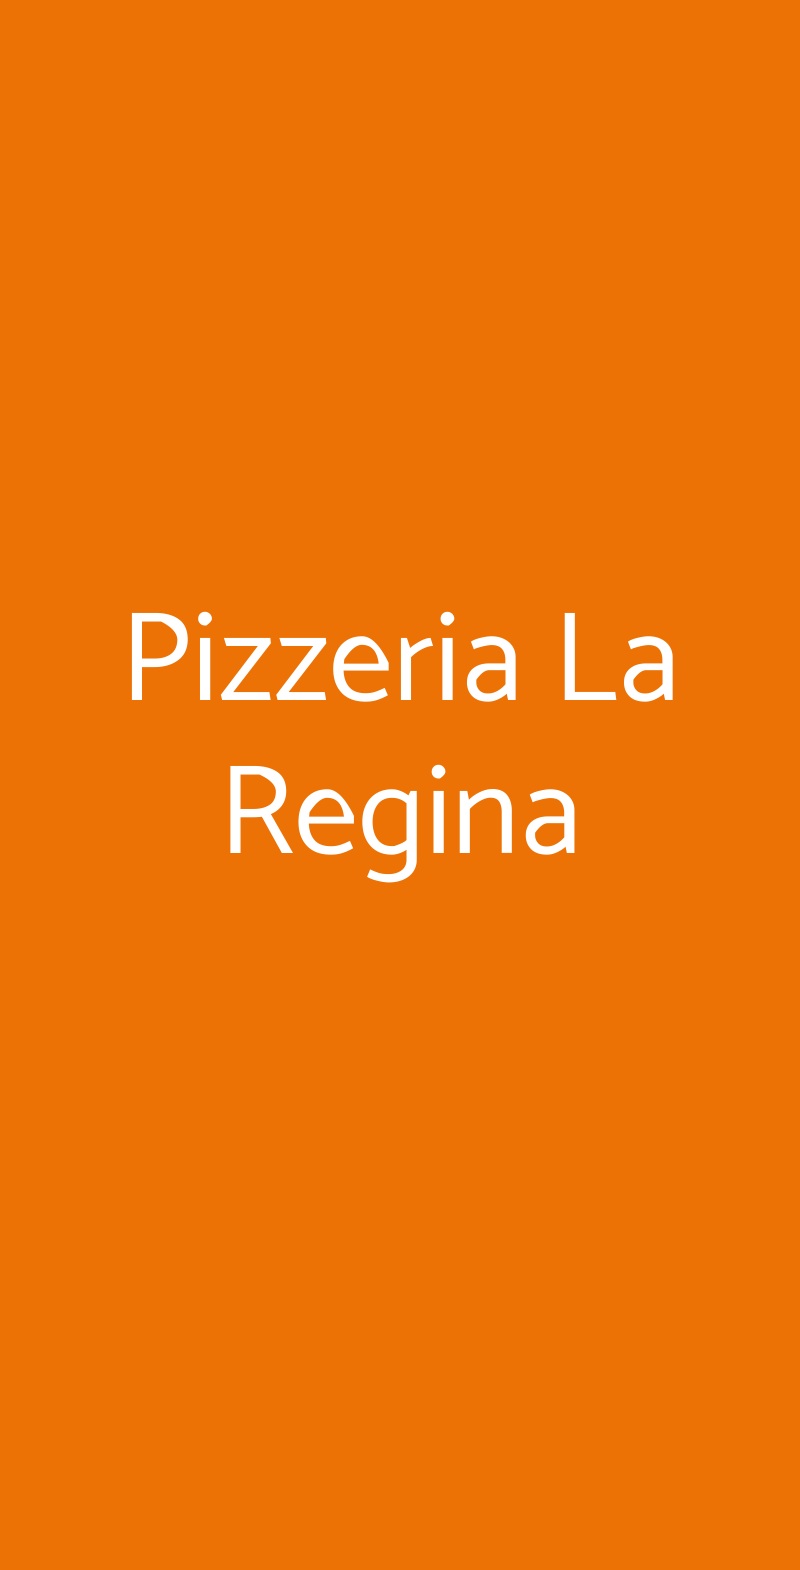 Pizzeria La Regina Napoli menù 1 pagina